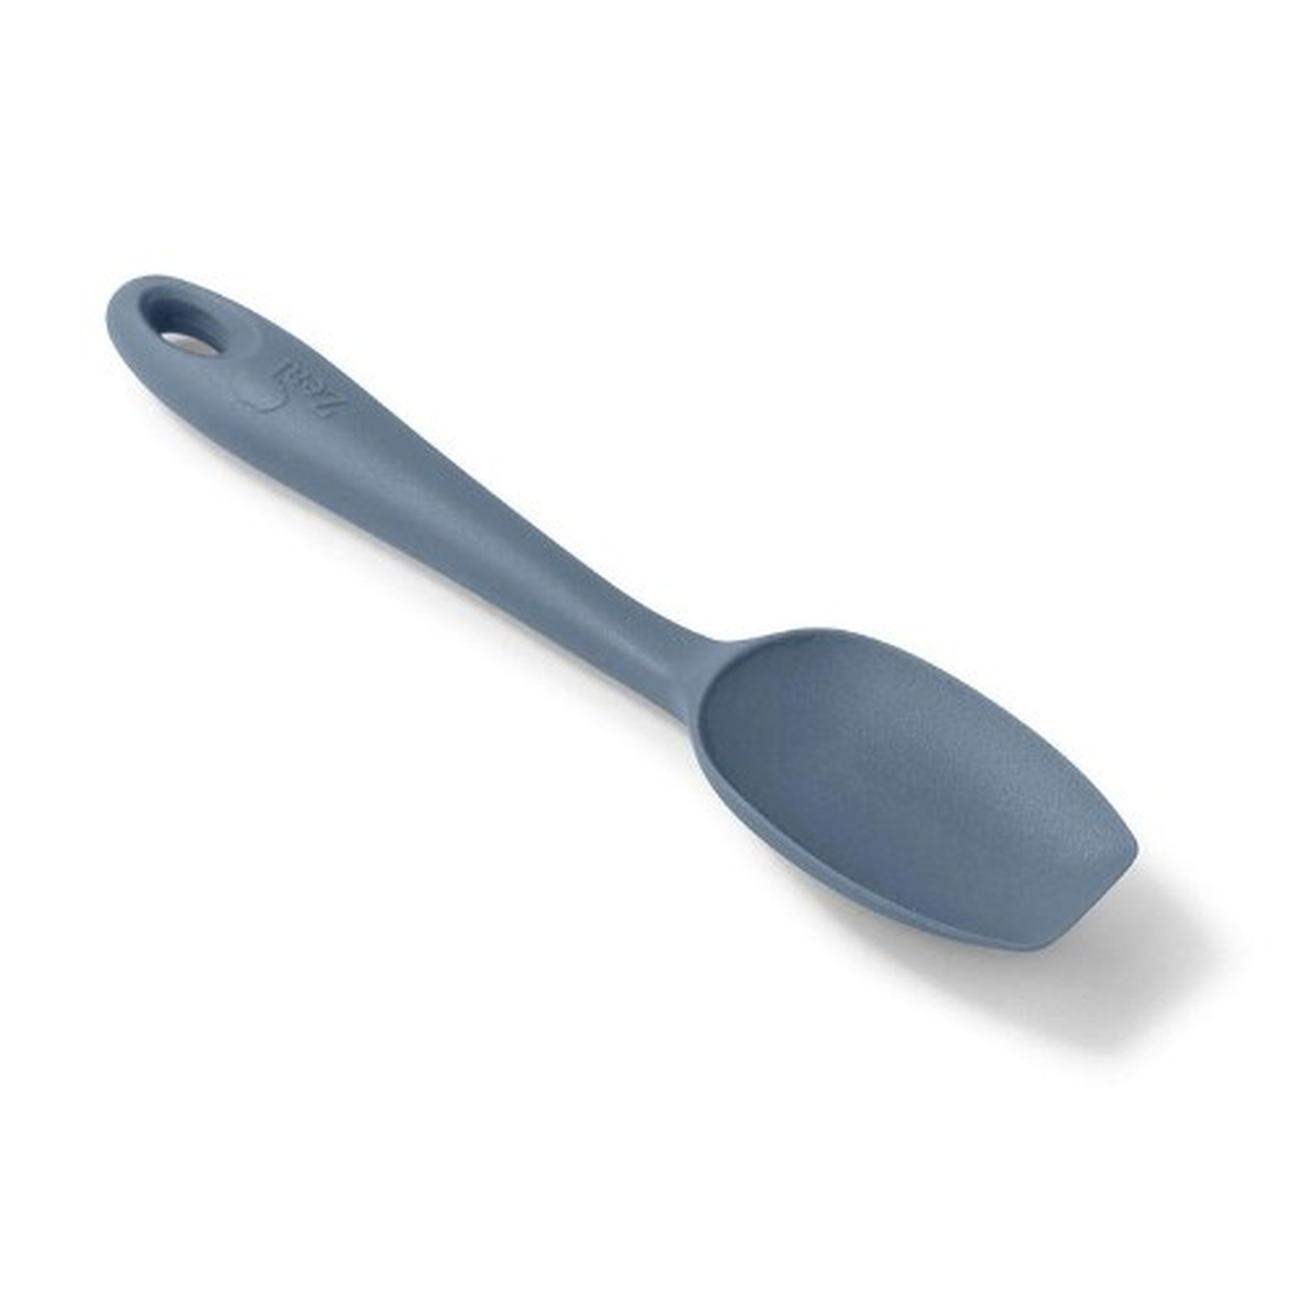 zeal-spatula-spoon-provence-20cm - Zeal Silicone Spatula Spoon Small